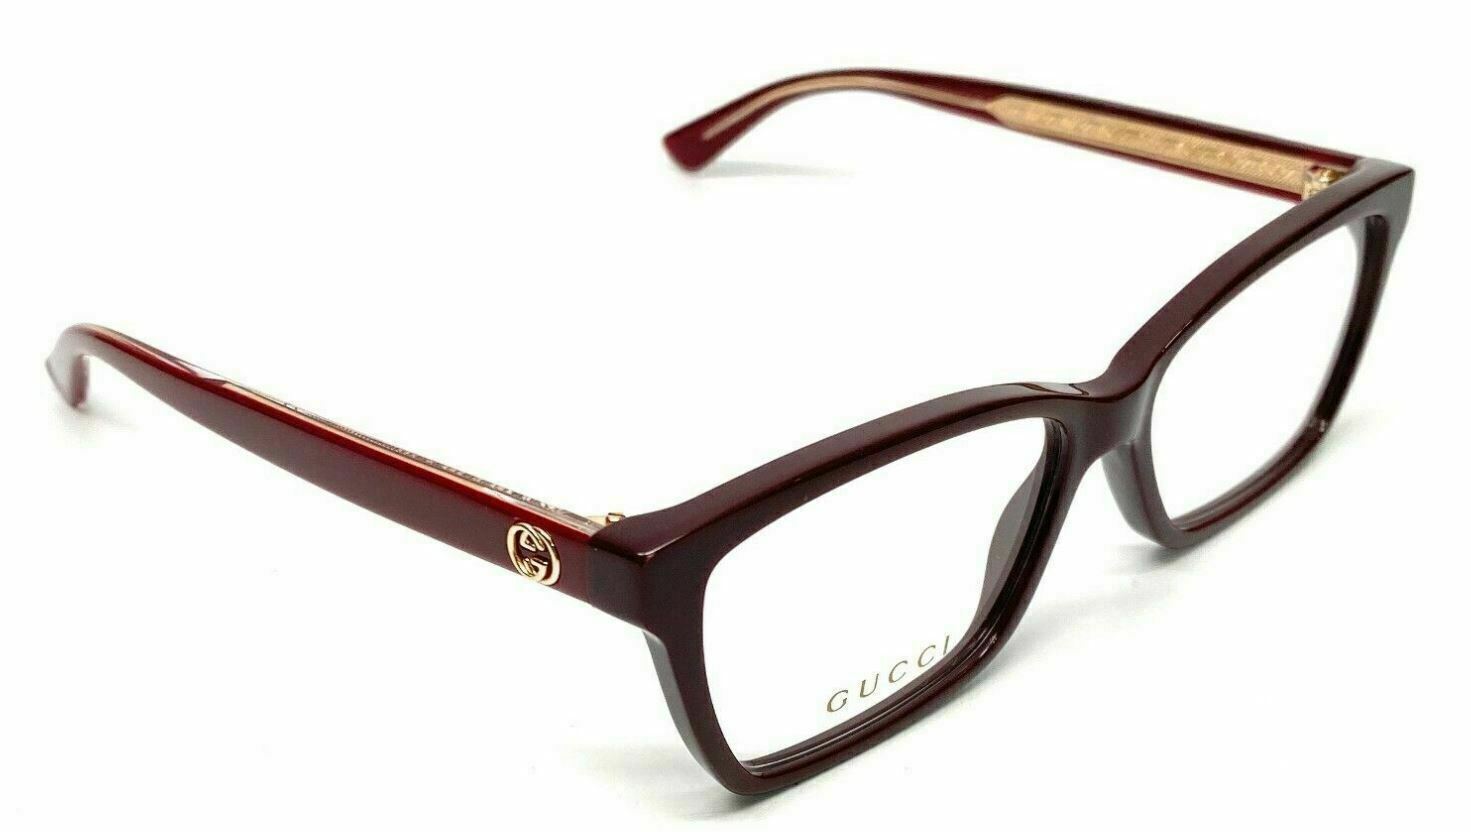 Gucci GG 0312 O 003 Burgundy Eyeglasses